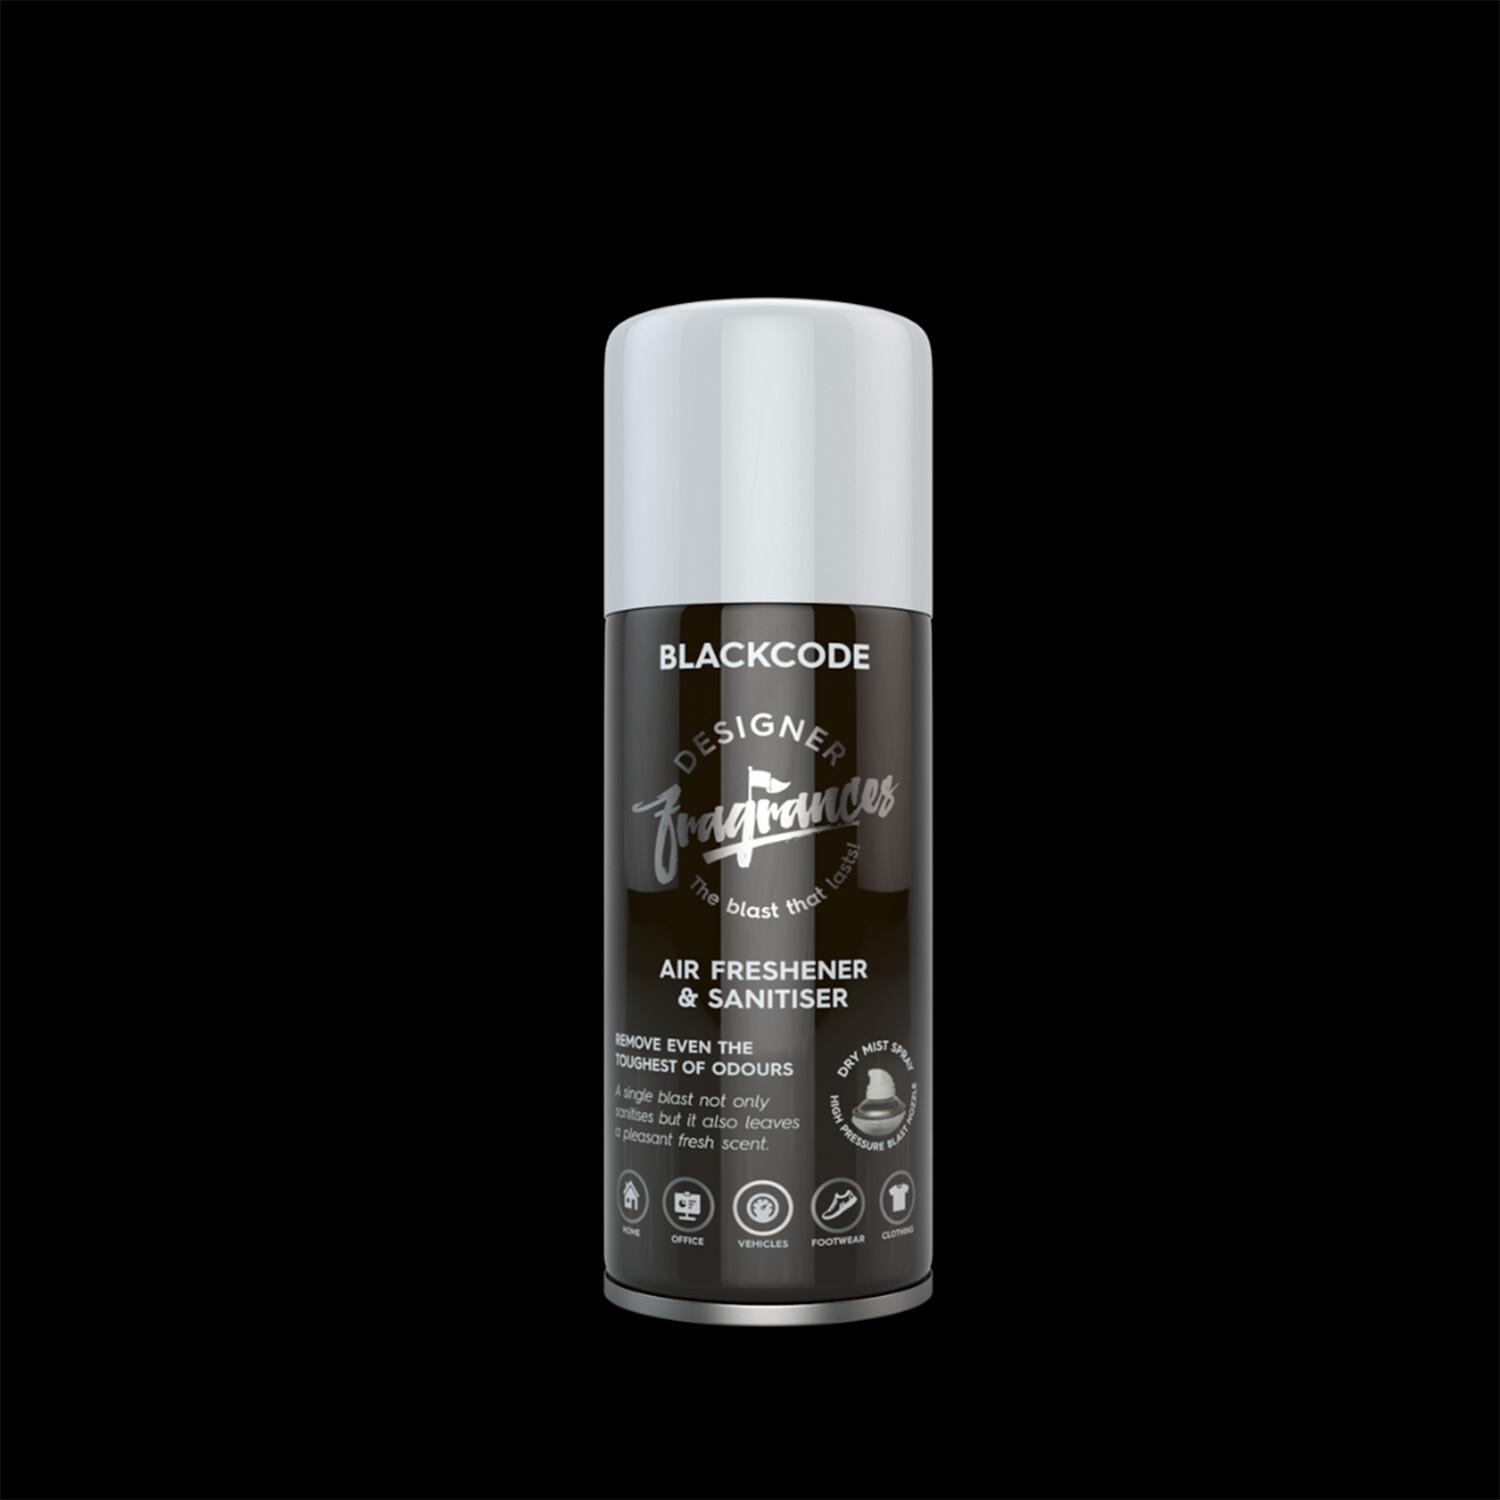 Designer Fragrances Blackcode Air Freshener and Sanitiser Blast Can Image 2